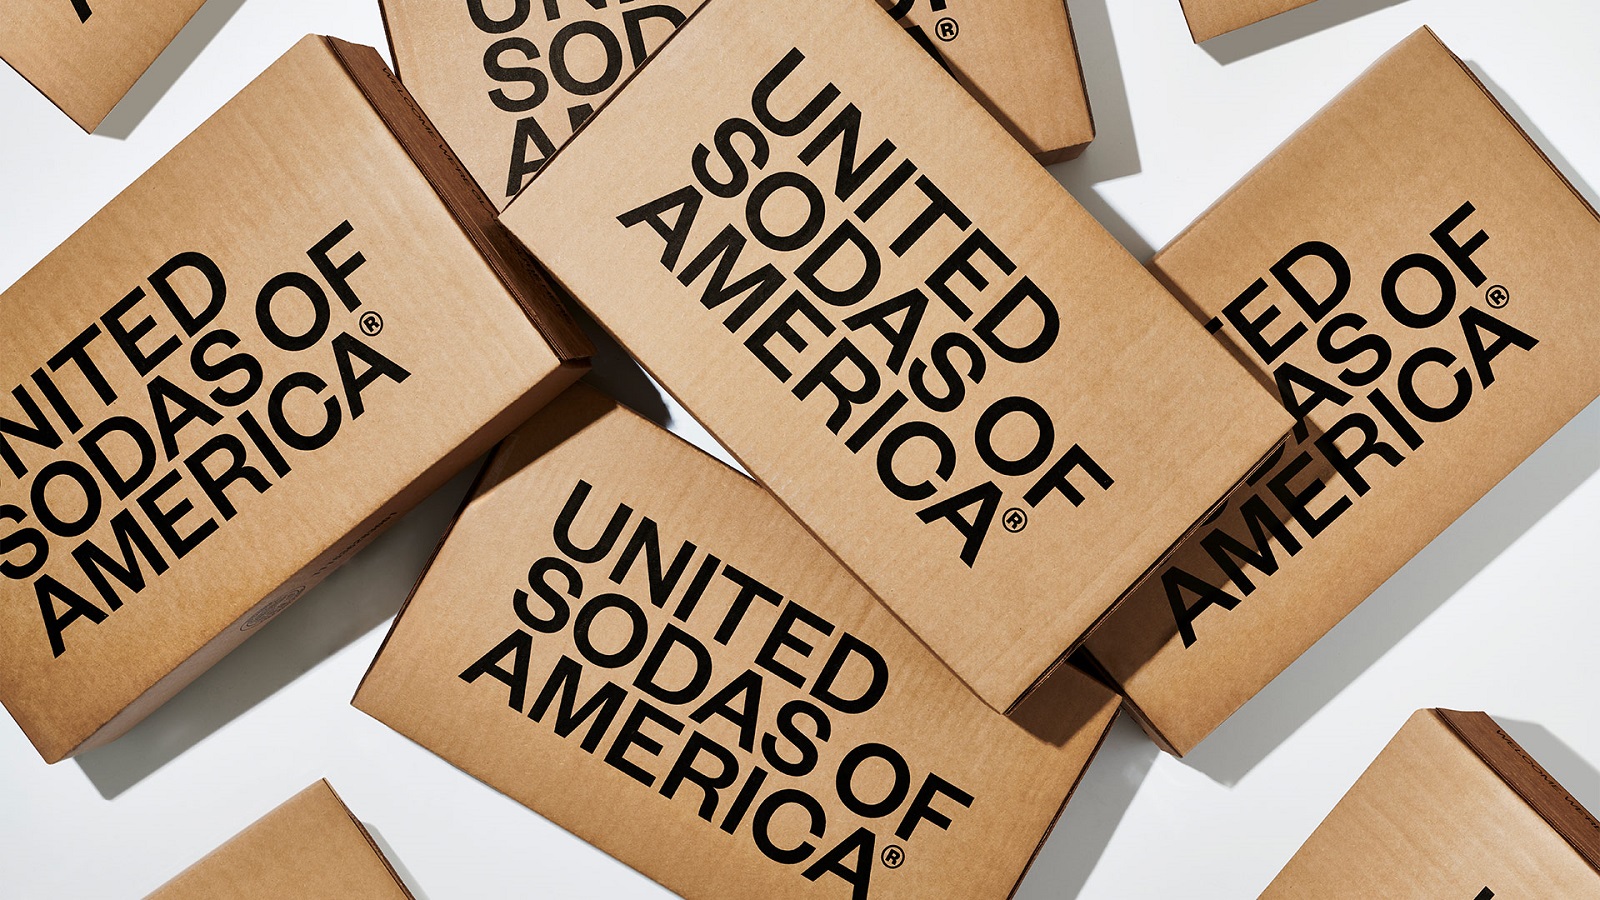 Дизайн этикетки, Дизайн упаковки, Брендинг, Айдентика, United Sodas of America, CENTER